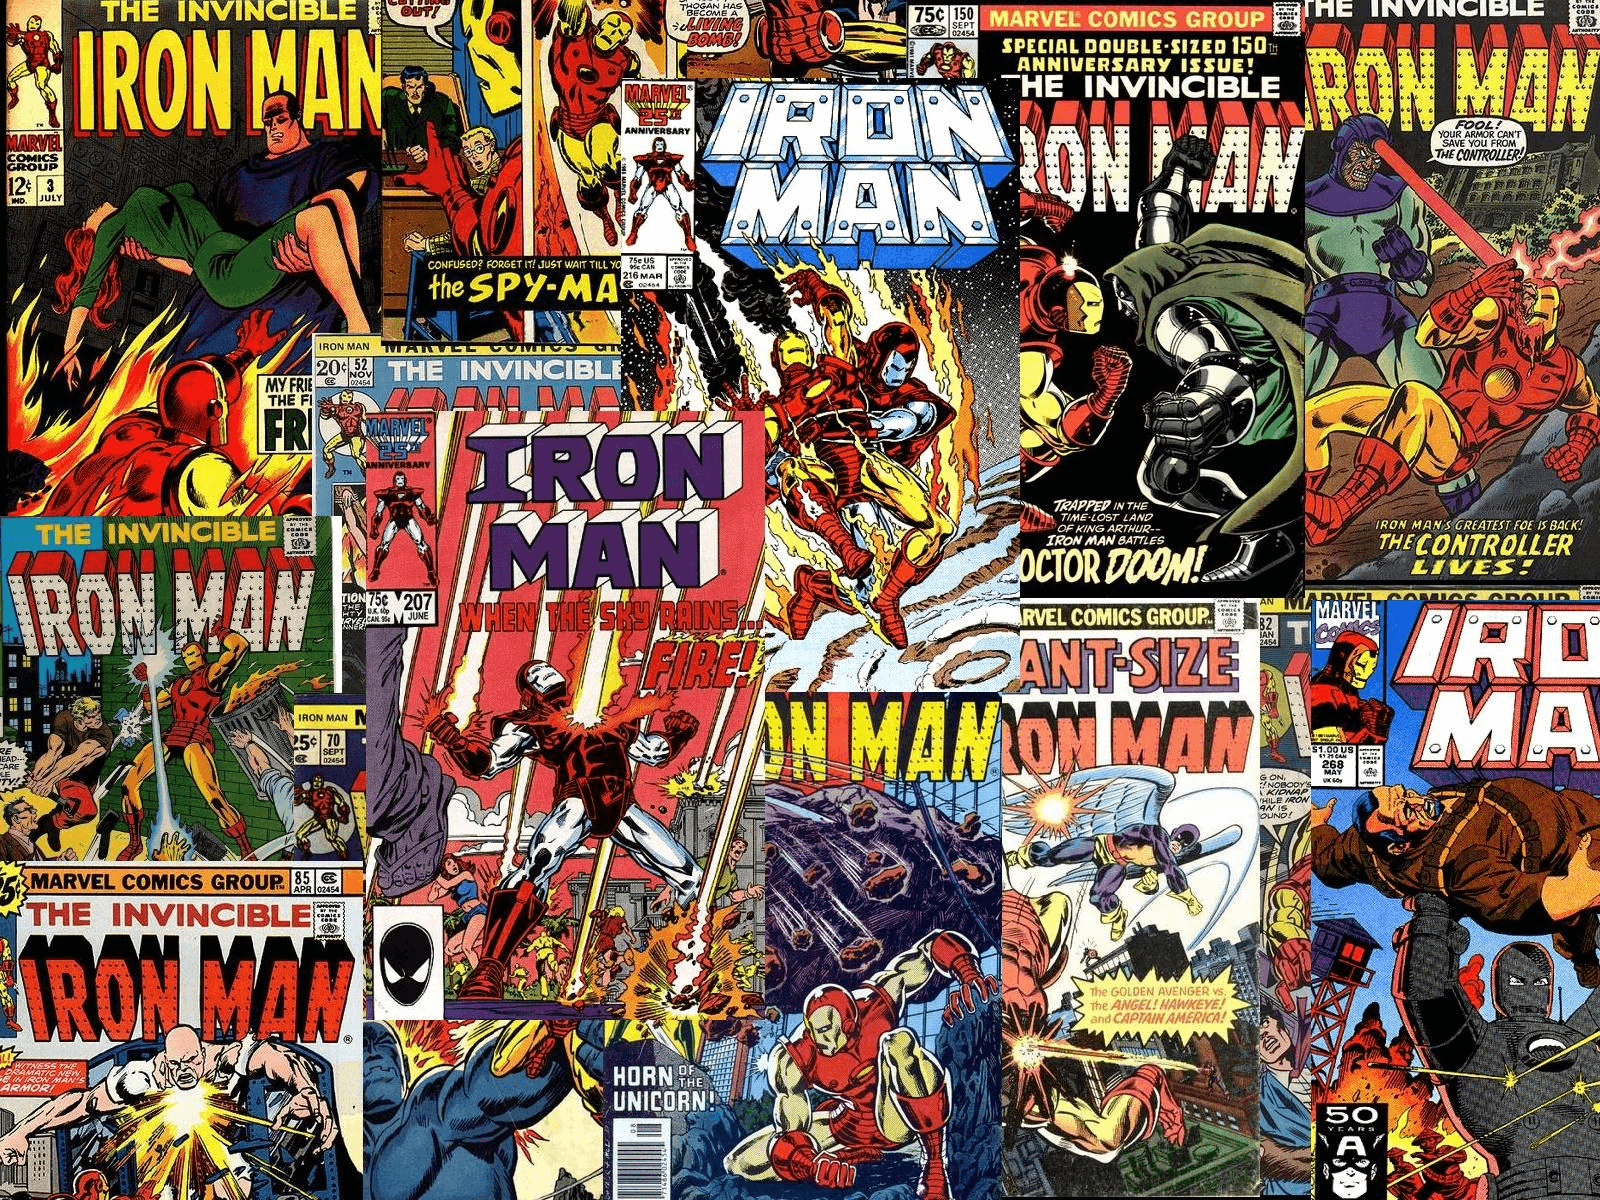 Marvel Comics Wallpaper. Free Photo Download For Android, Desktop